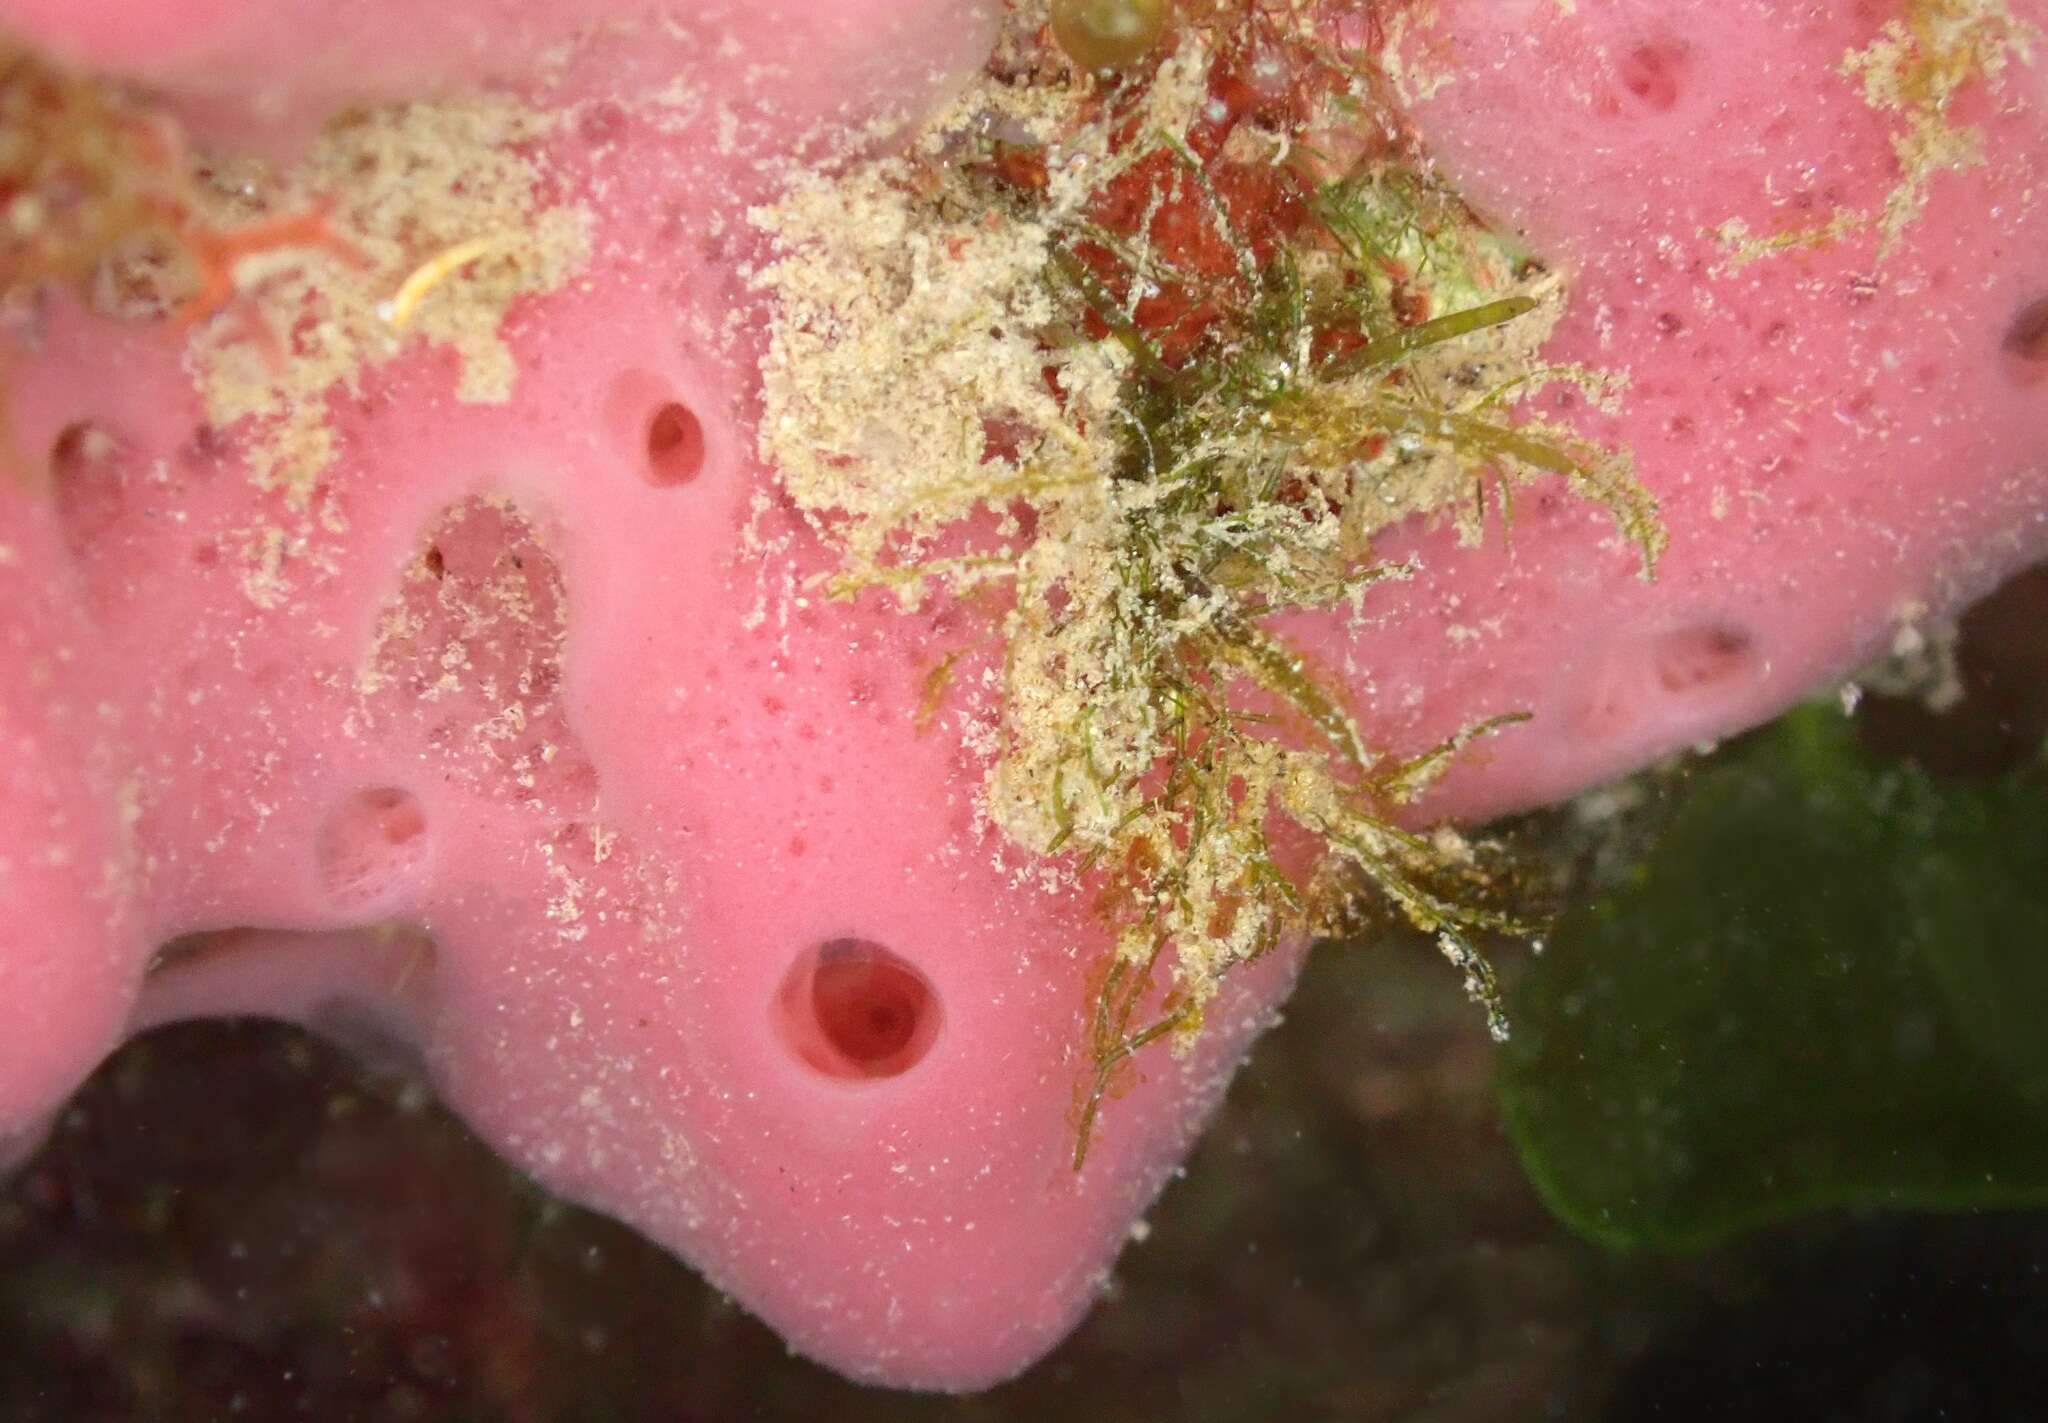 Image of pink tube sponge